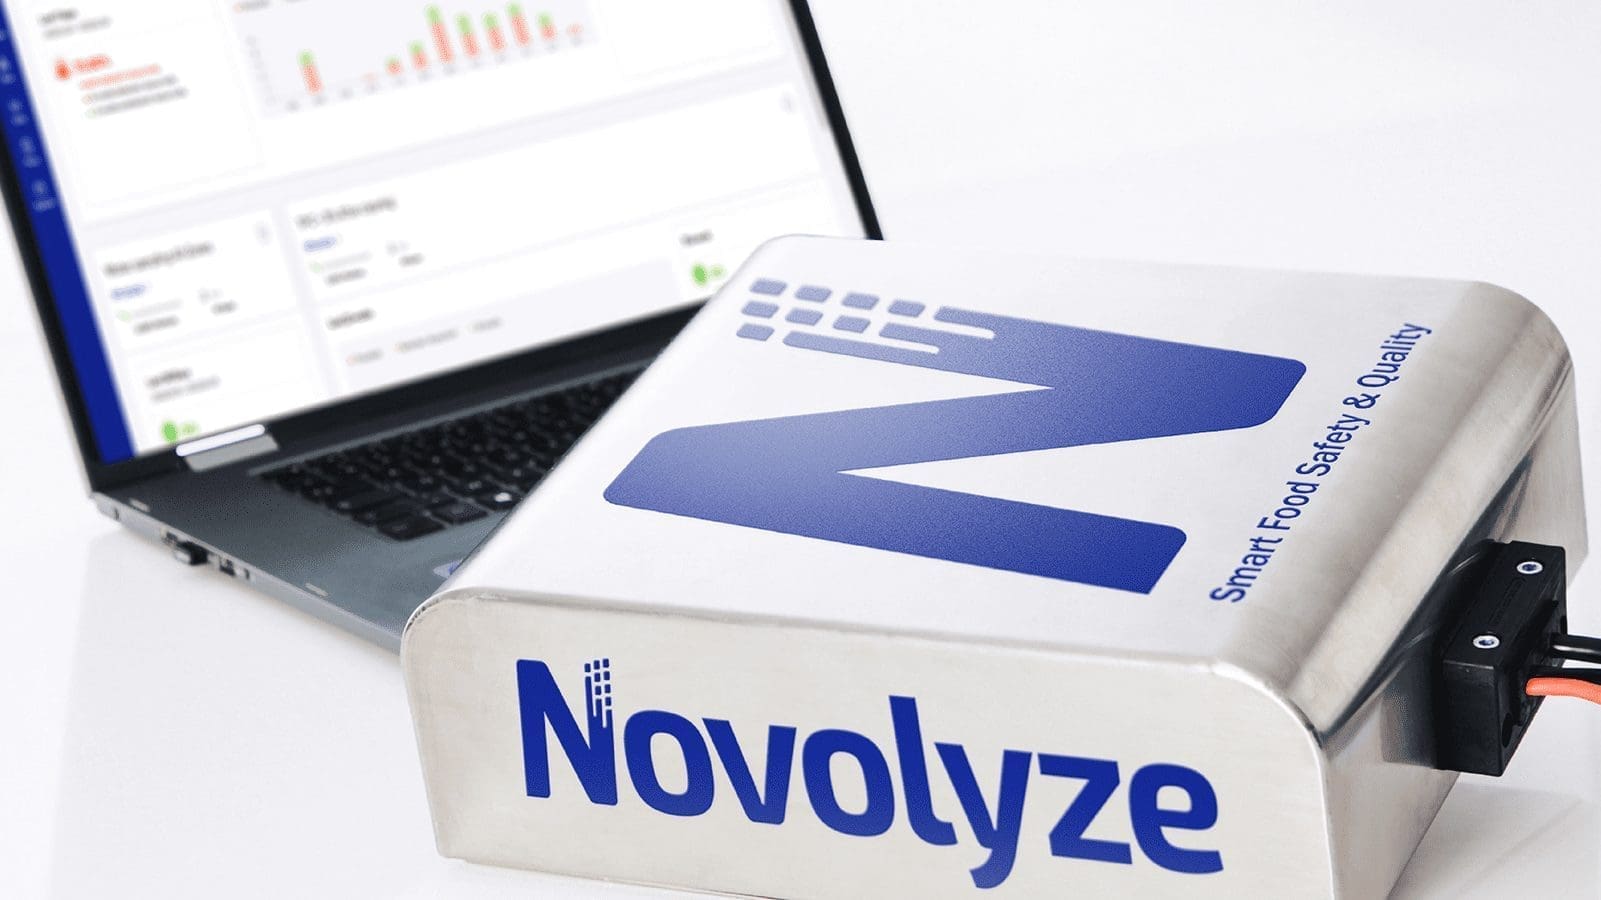 Novolyze raises U.S$ 15 million in Series A financing round